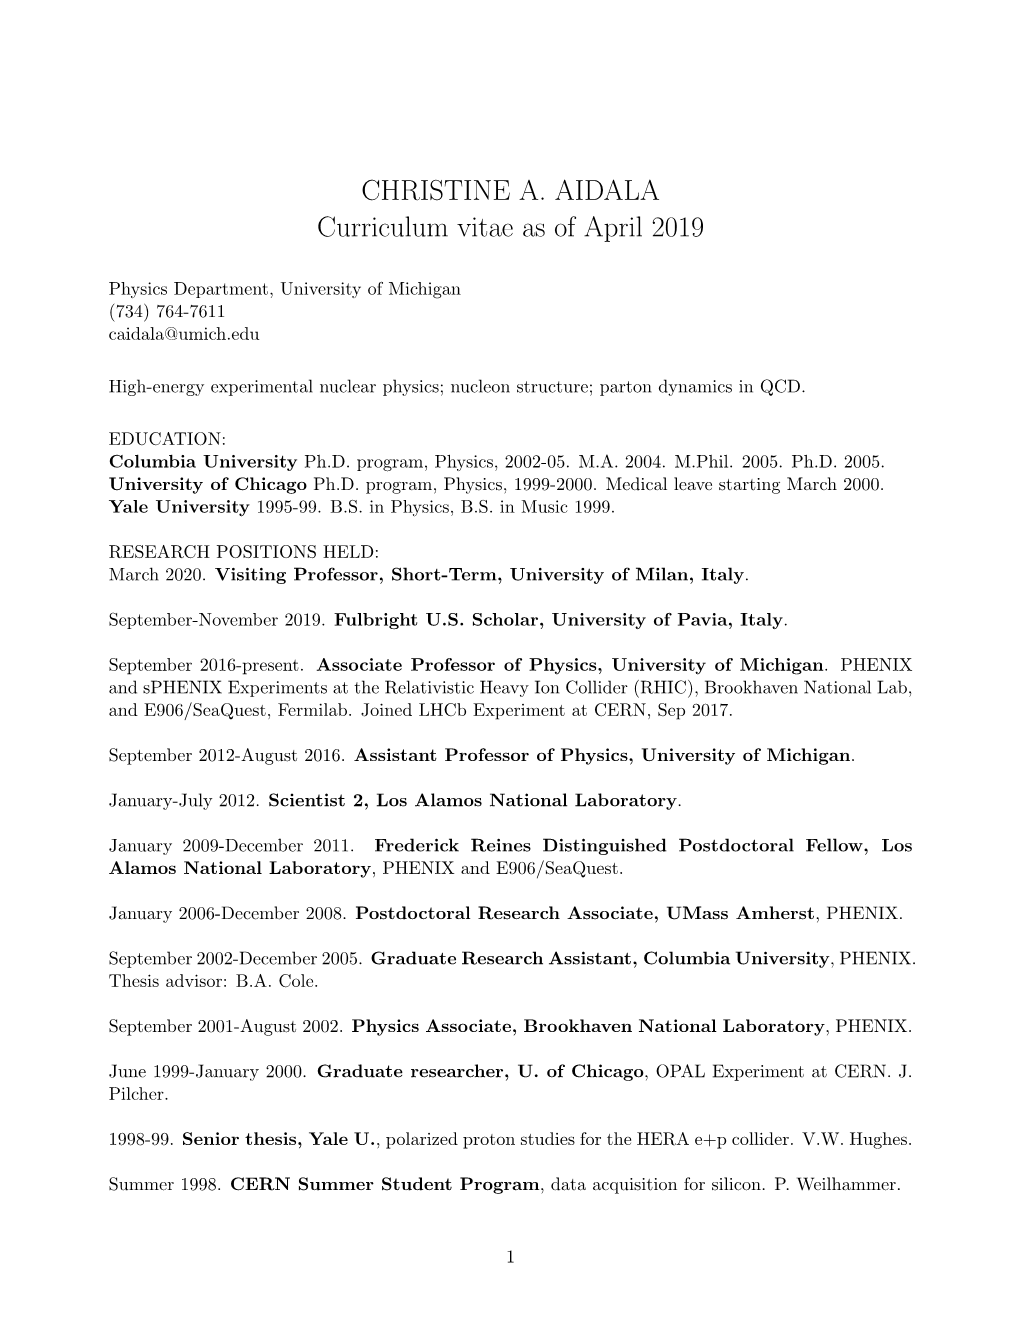 CHRISTINE A. AIDALA Curriculum Vitae As of April 2019